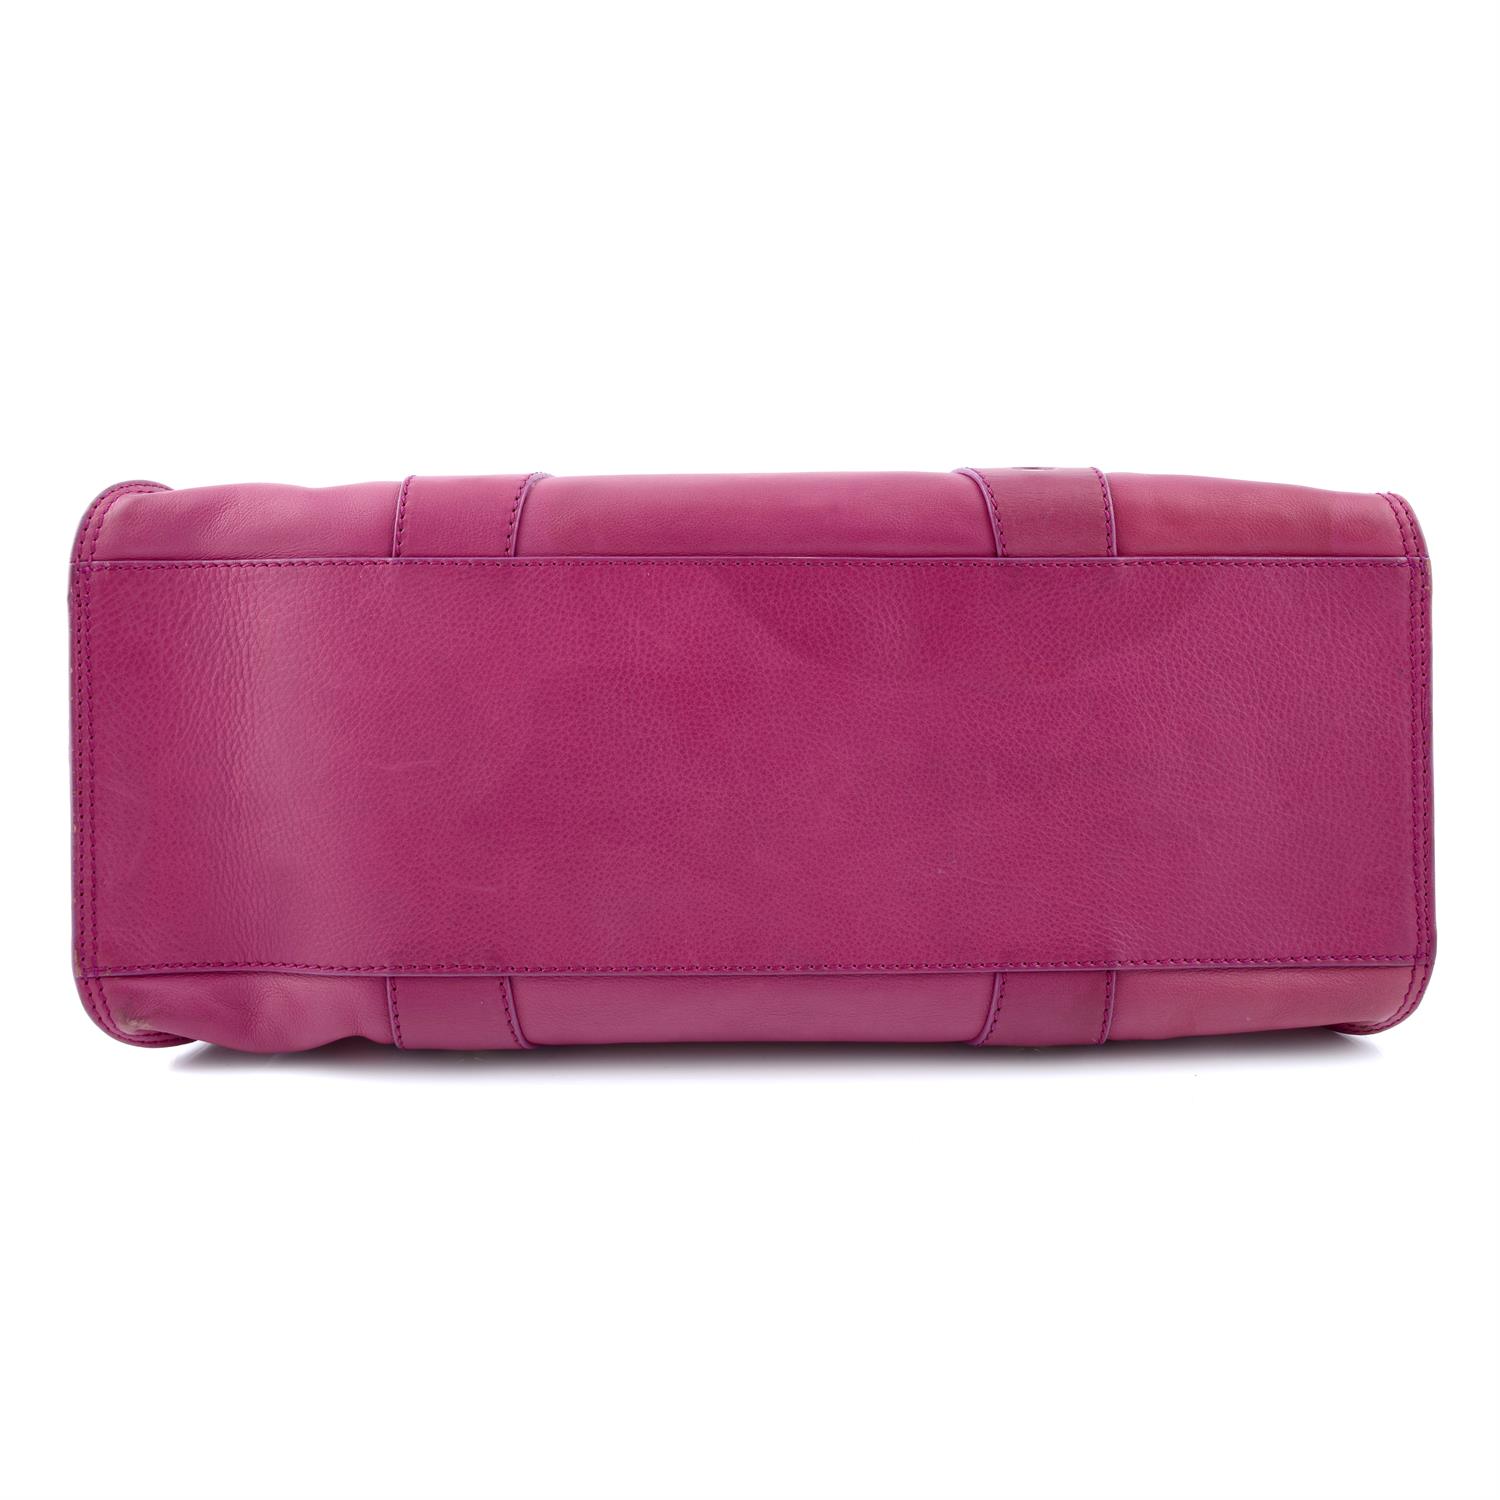 CÉLINE - a fuchsia leather handbag. - Image 4 of 5